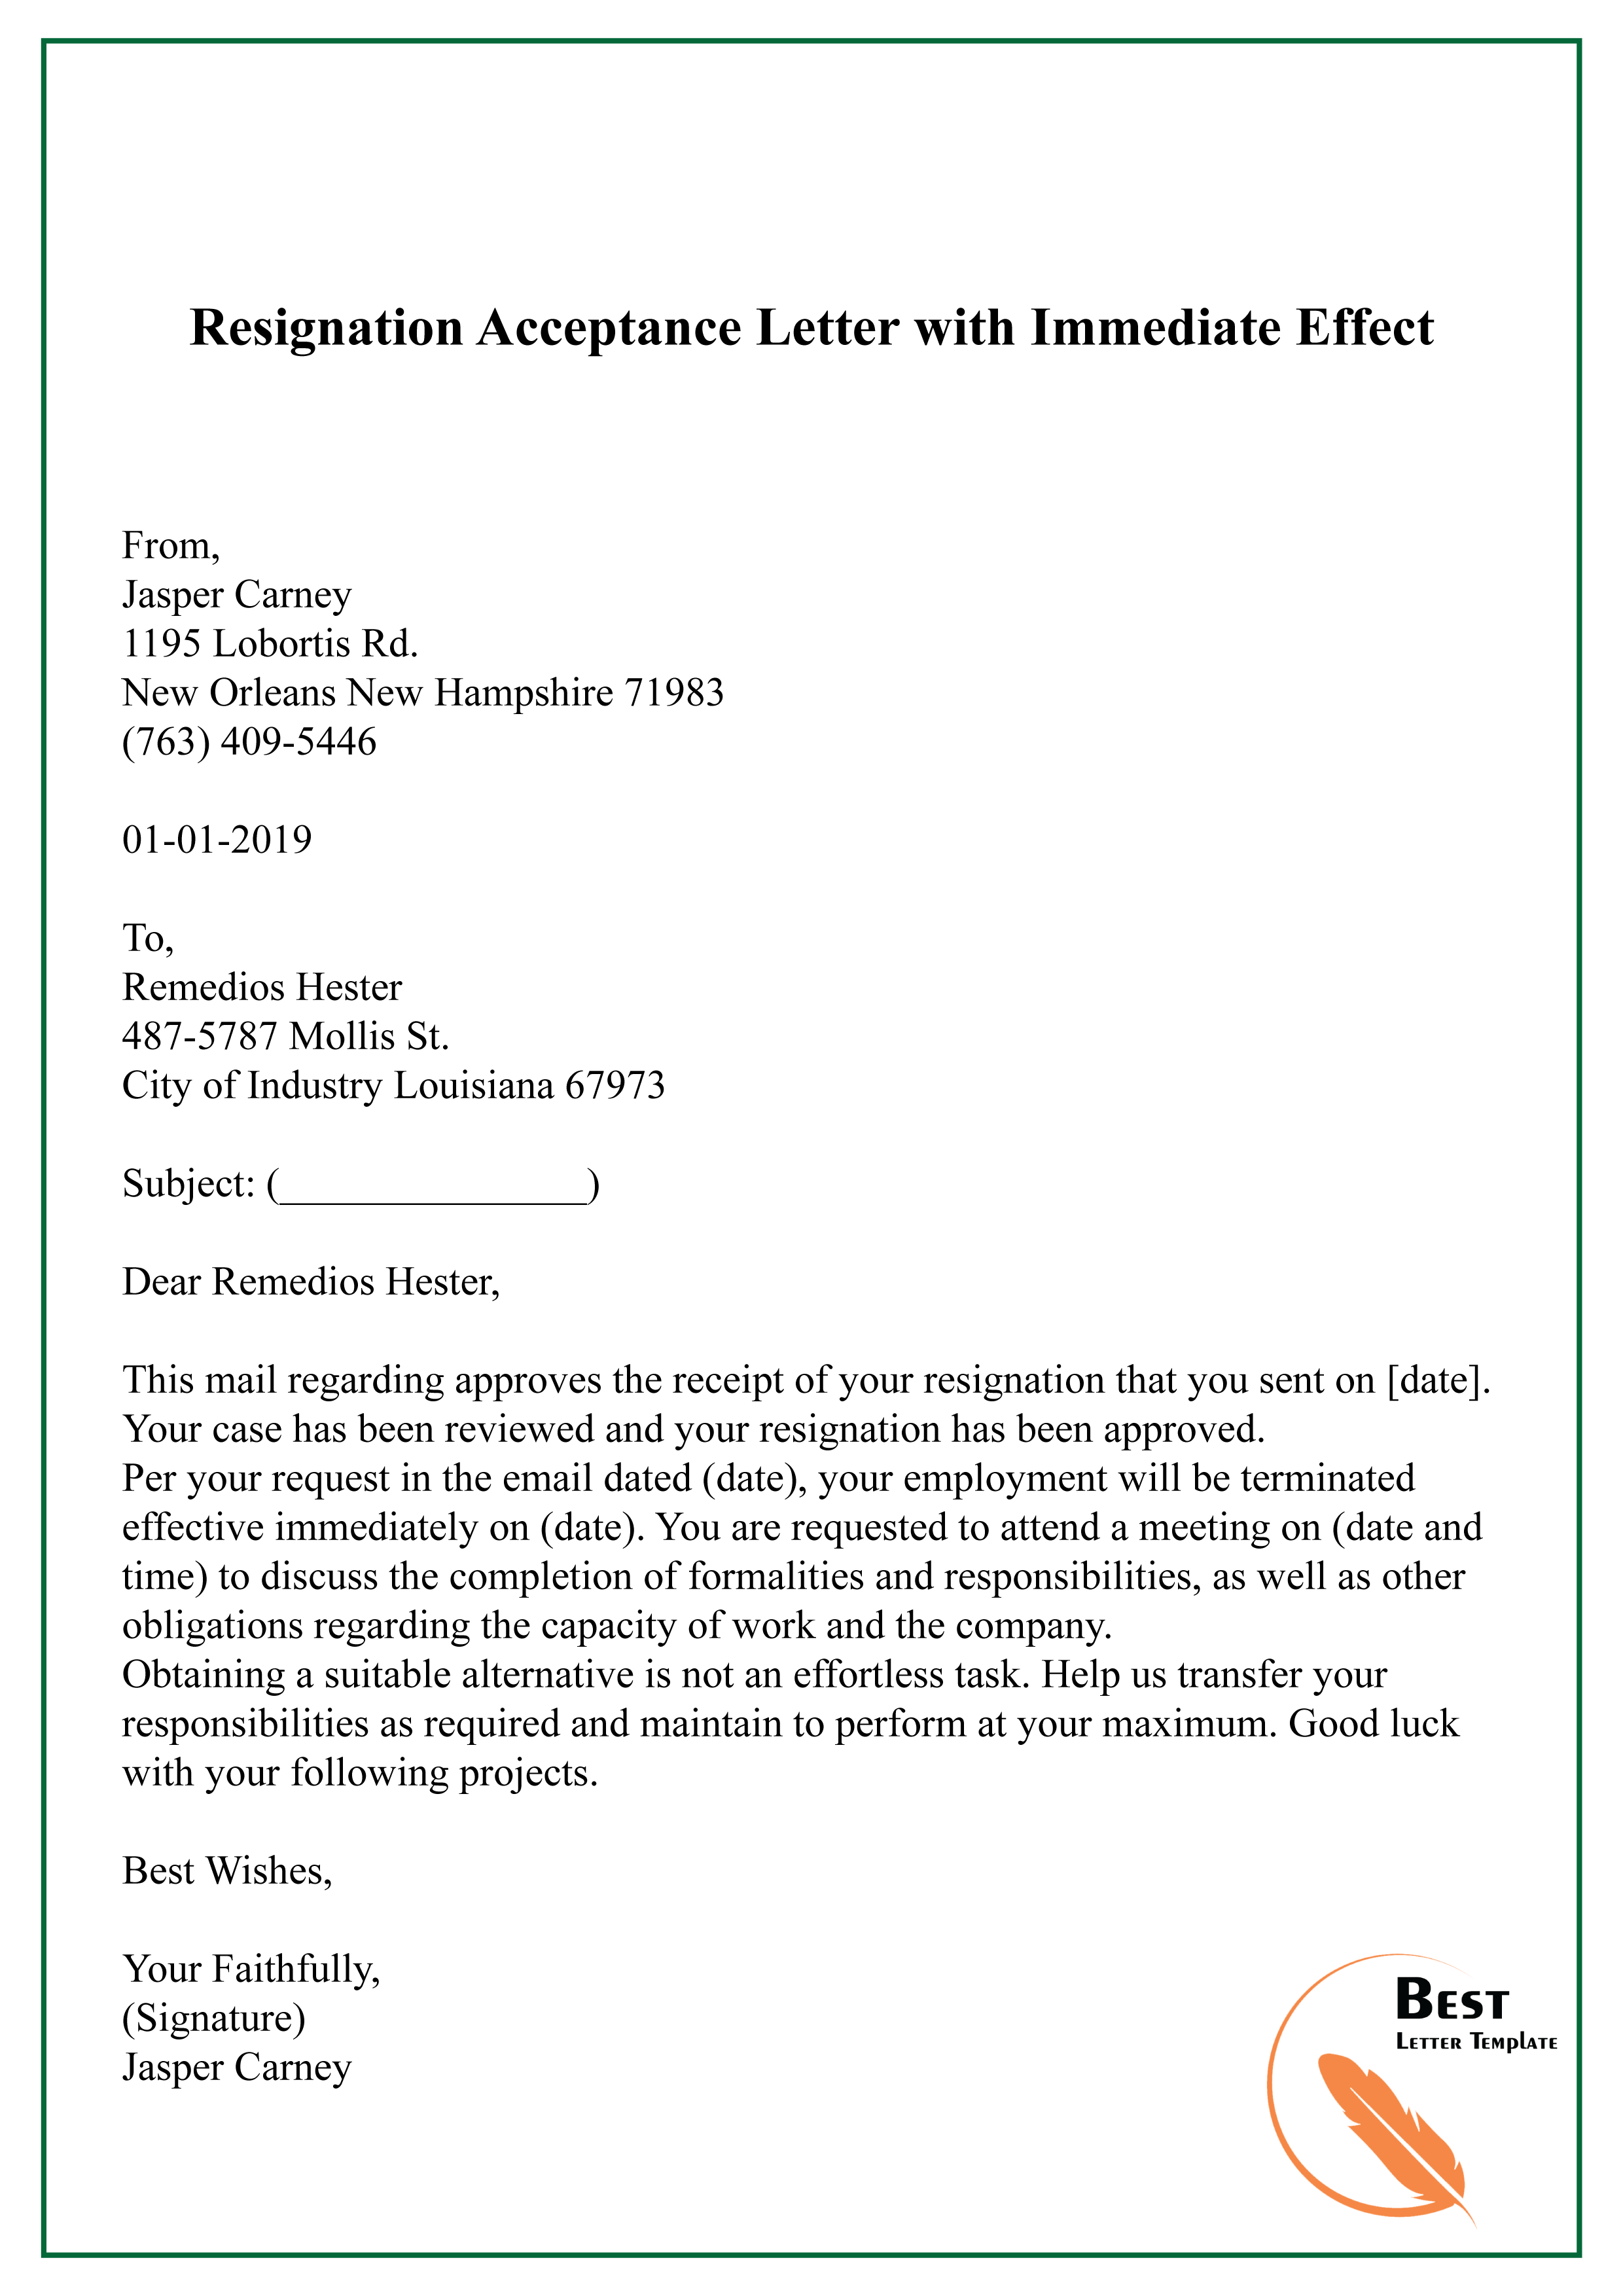 Sample Of Resignation Letter With Immediate Effect Resignation Letter